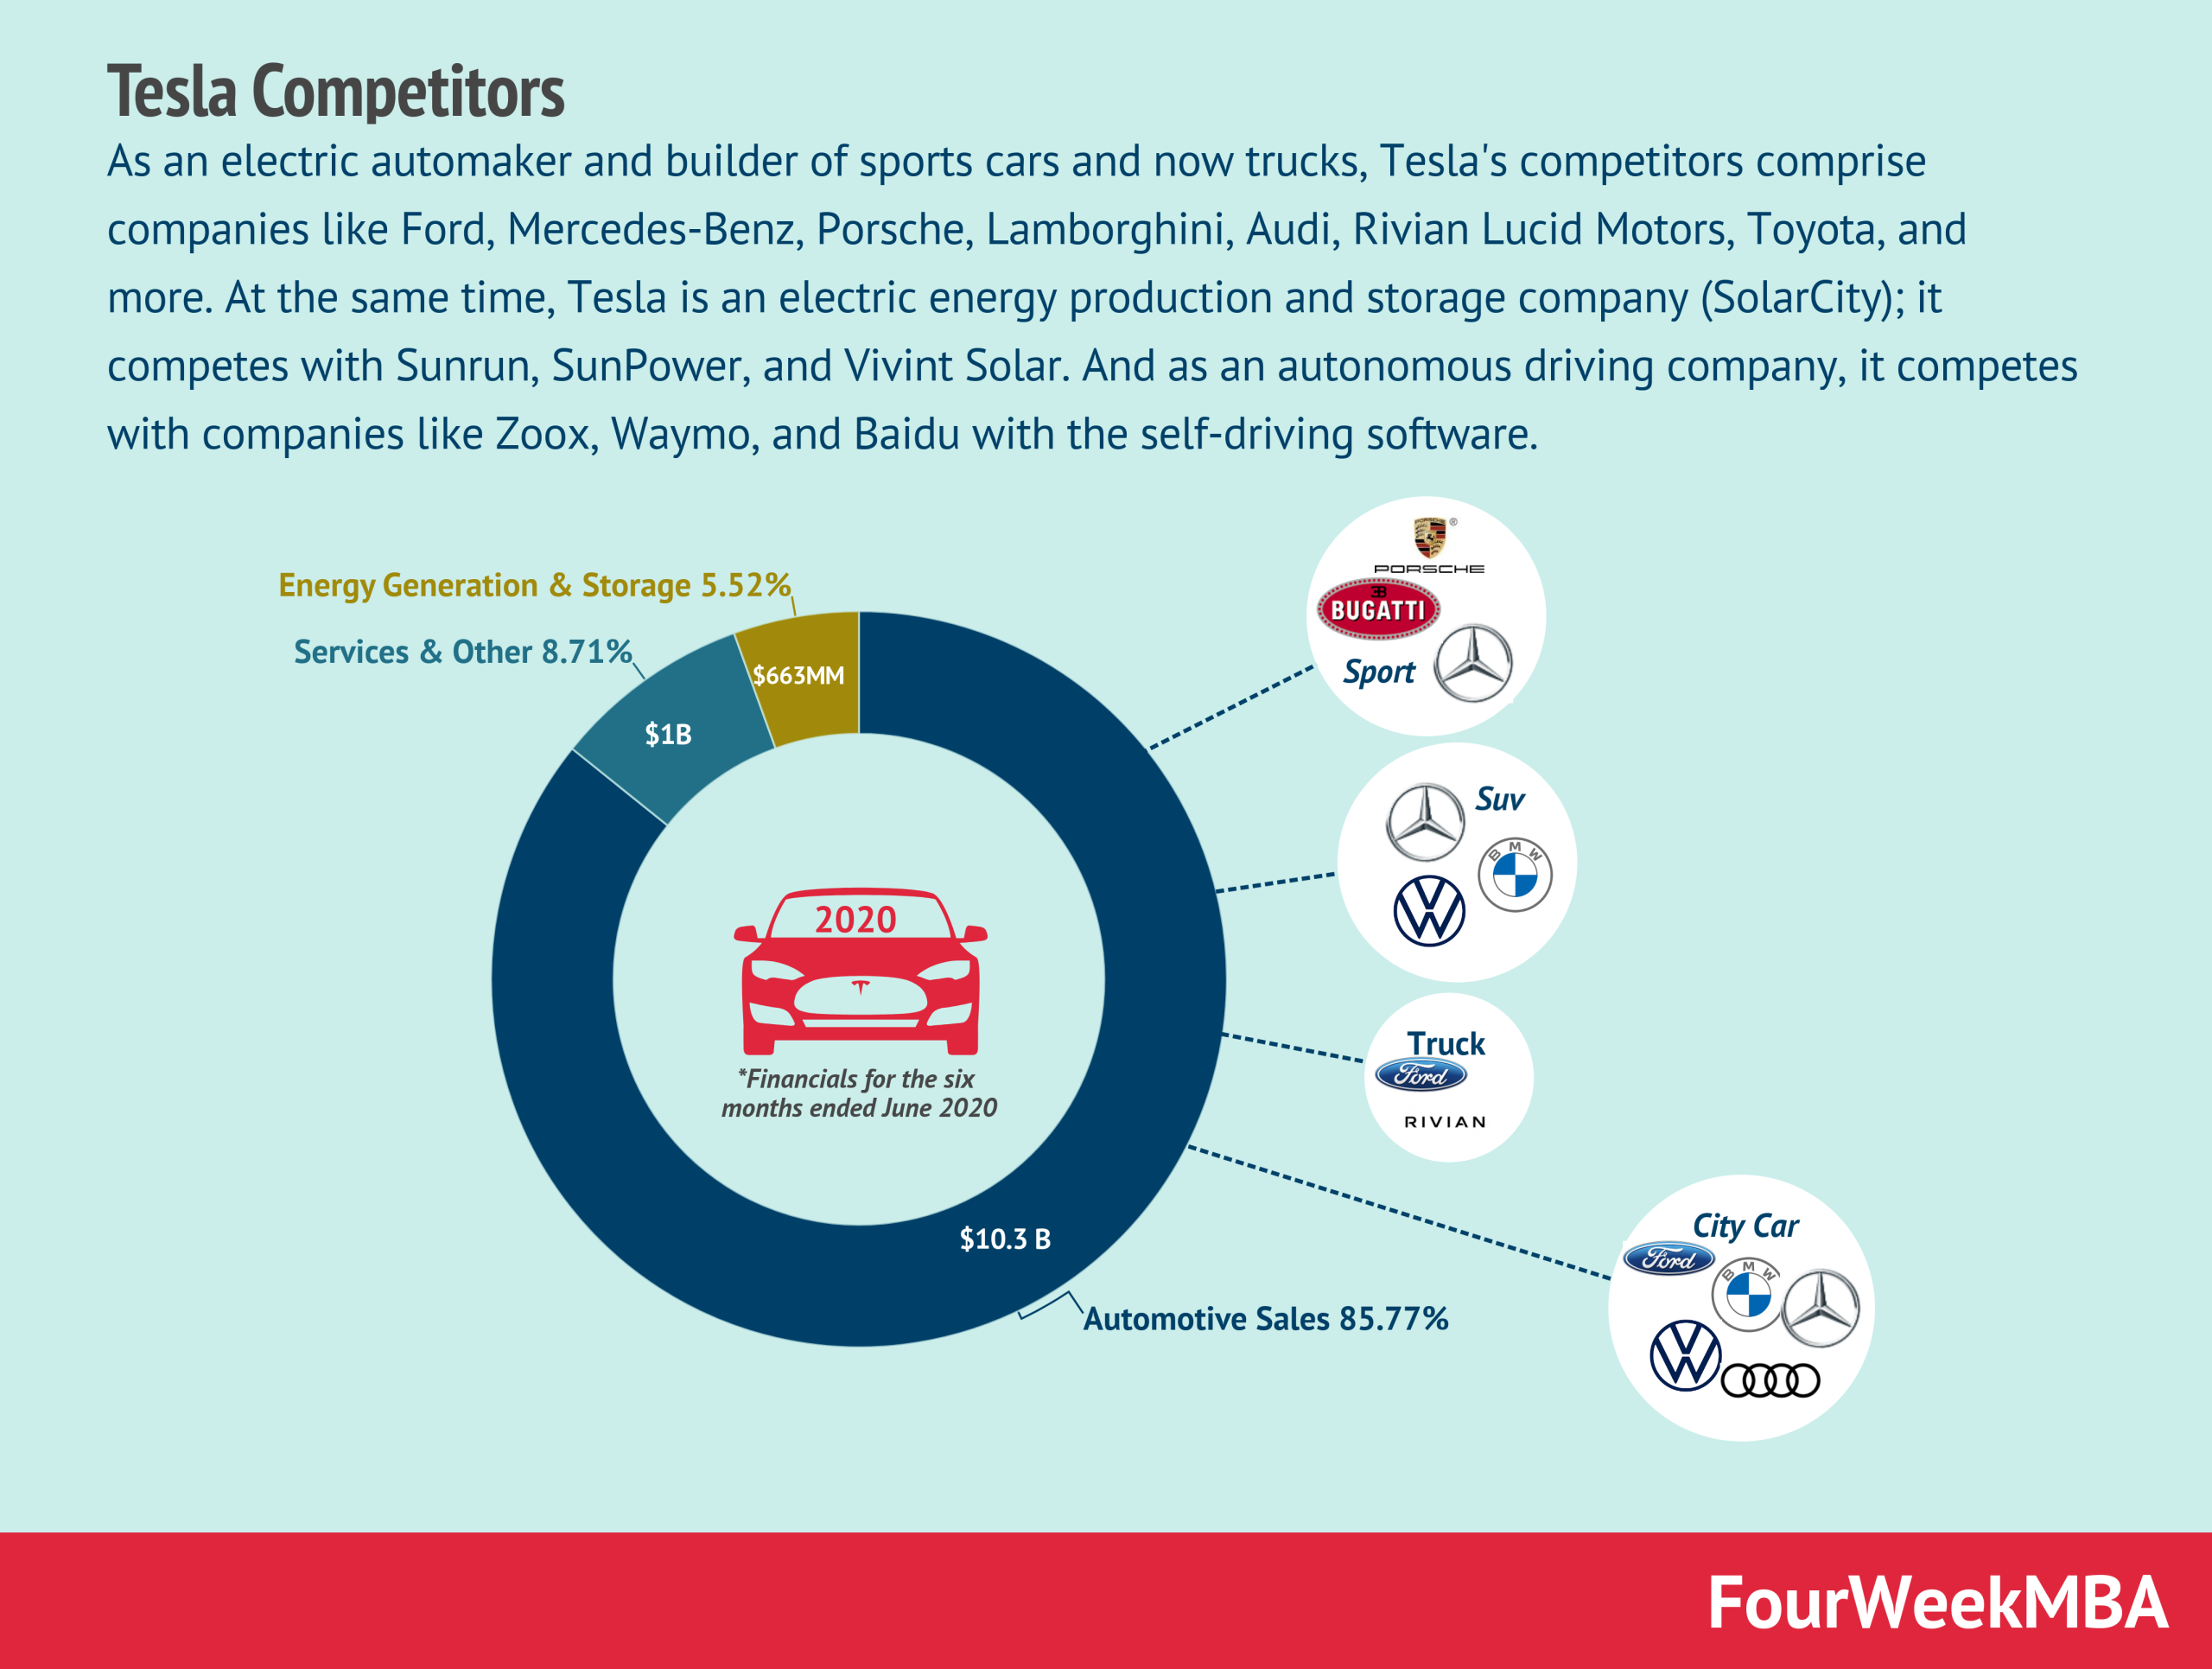 Tesla Competitors - FourWeekMBA